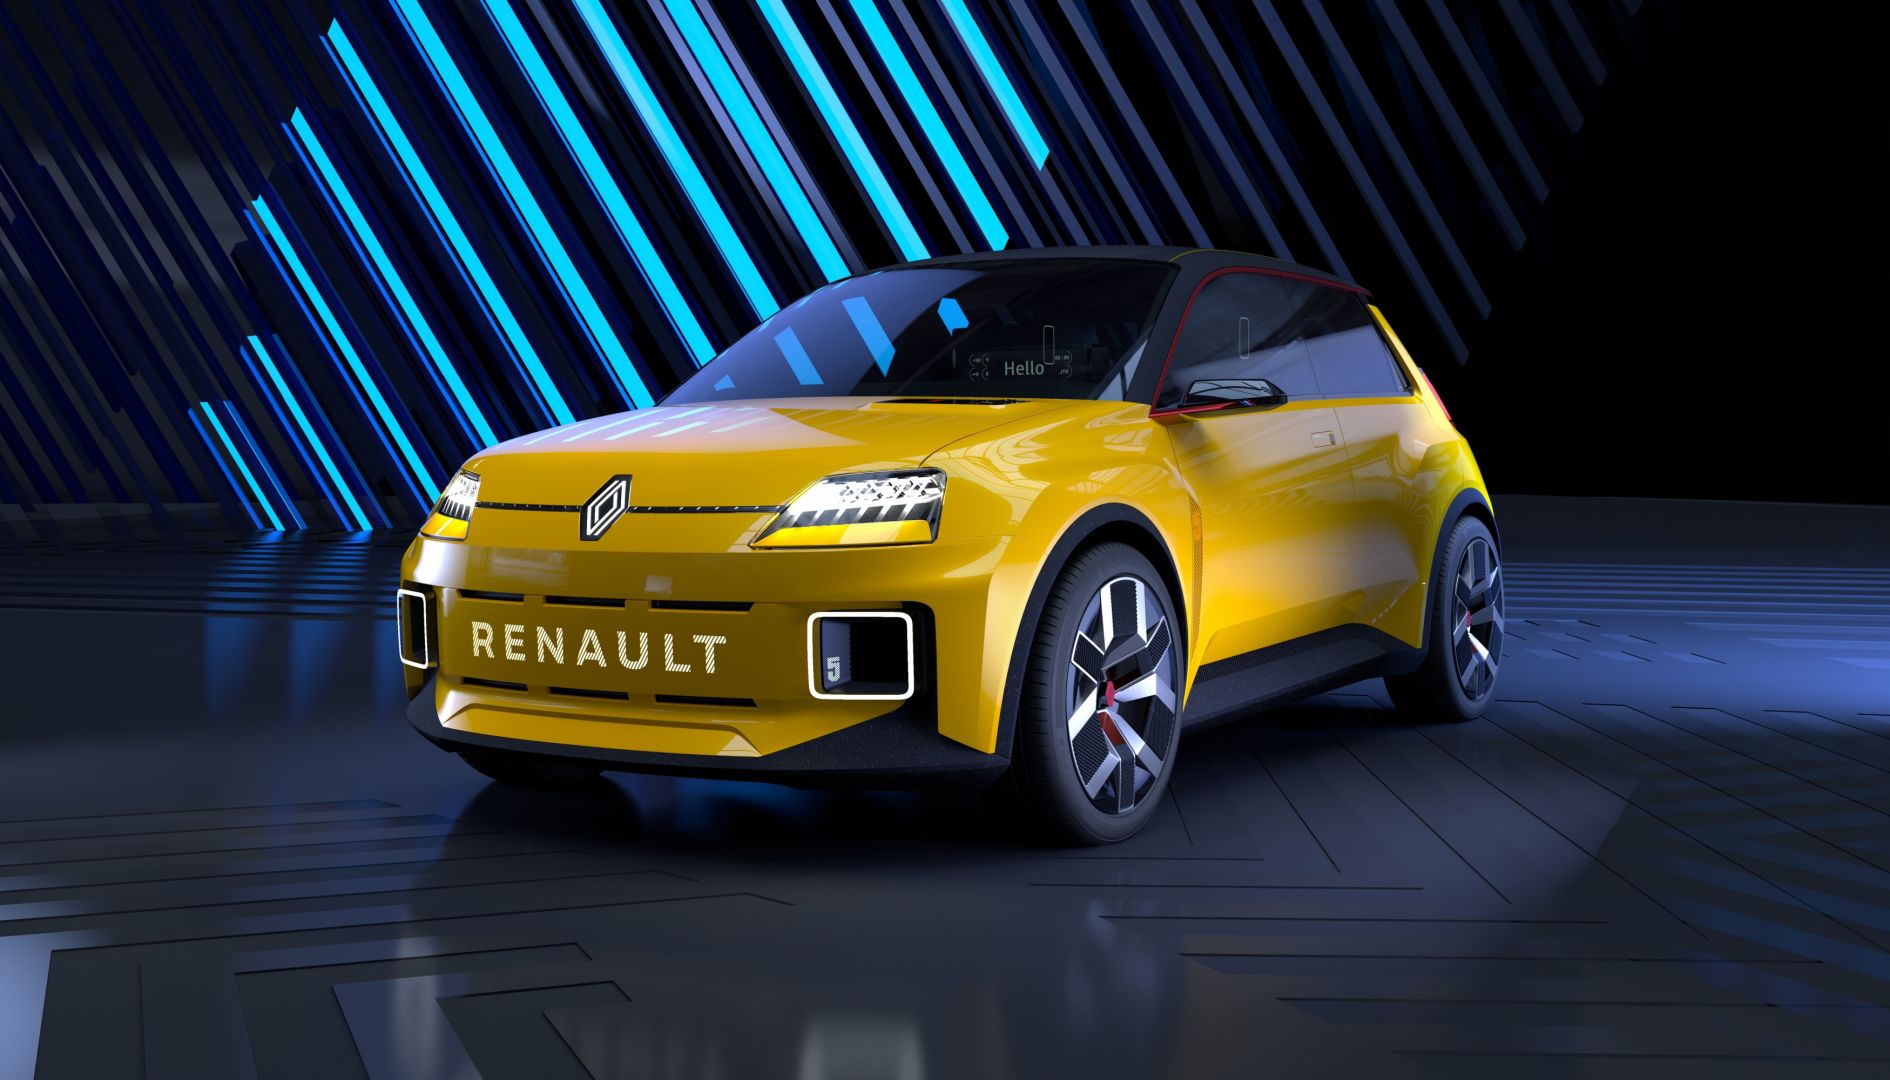 Alpine e Renault debuttano nuovi modelli al Goodwood Festival of Speed ​​2022 su PortalAutomotriz.com